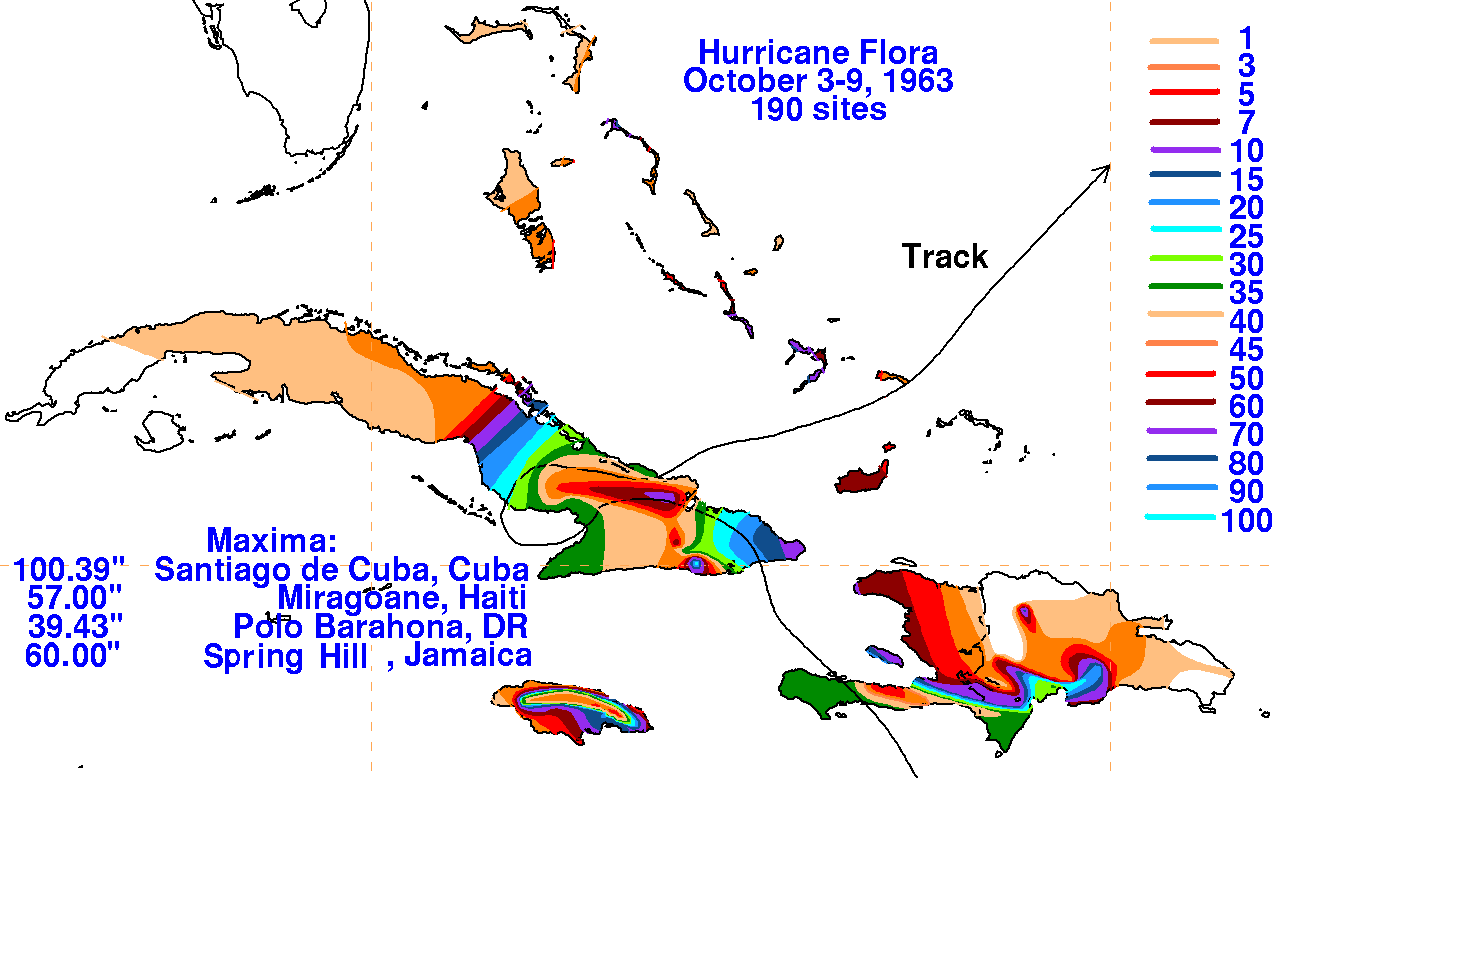 Flora (1963) Storm Total Rainfall